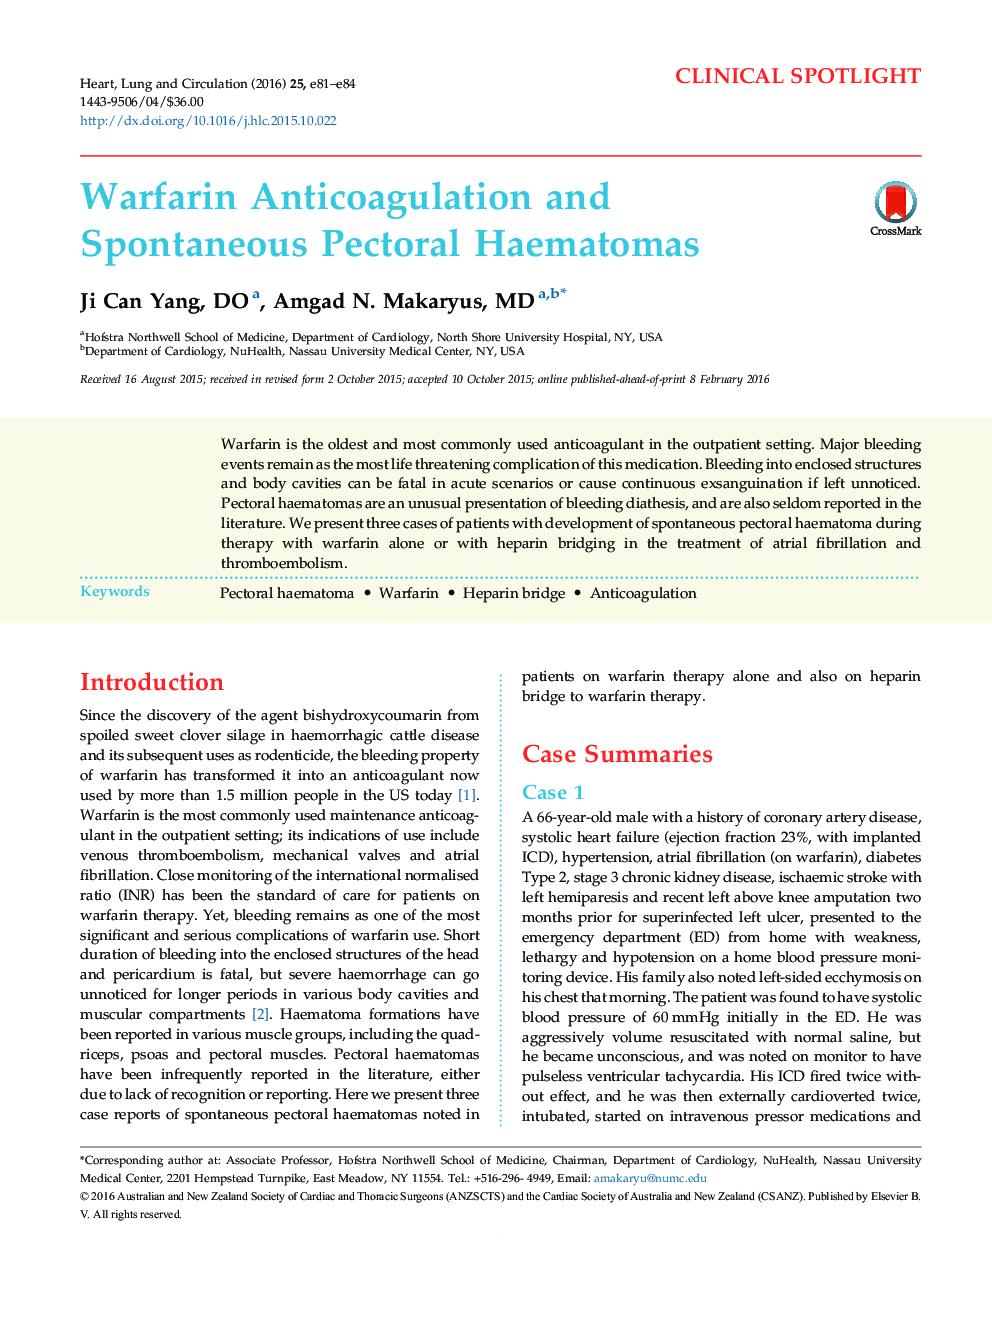 Warfarin Anticoagulation and Spontaneous Pectoral Haematomas